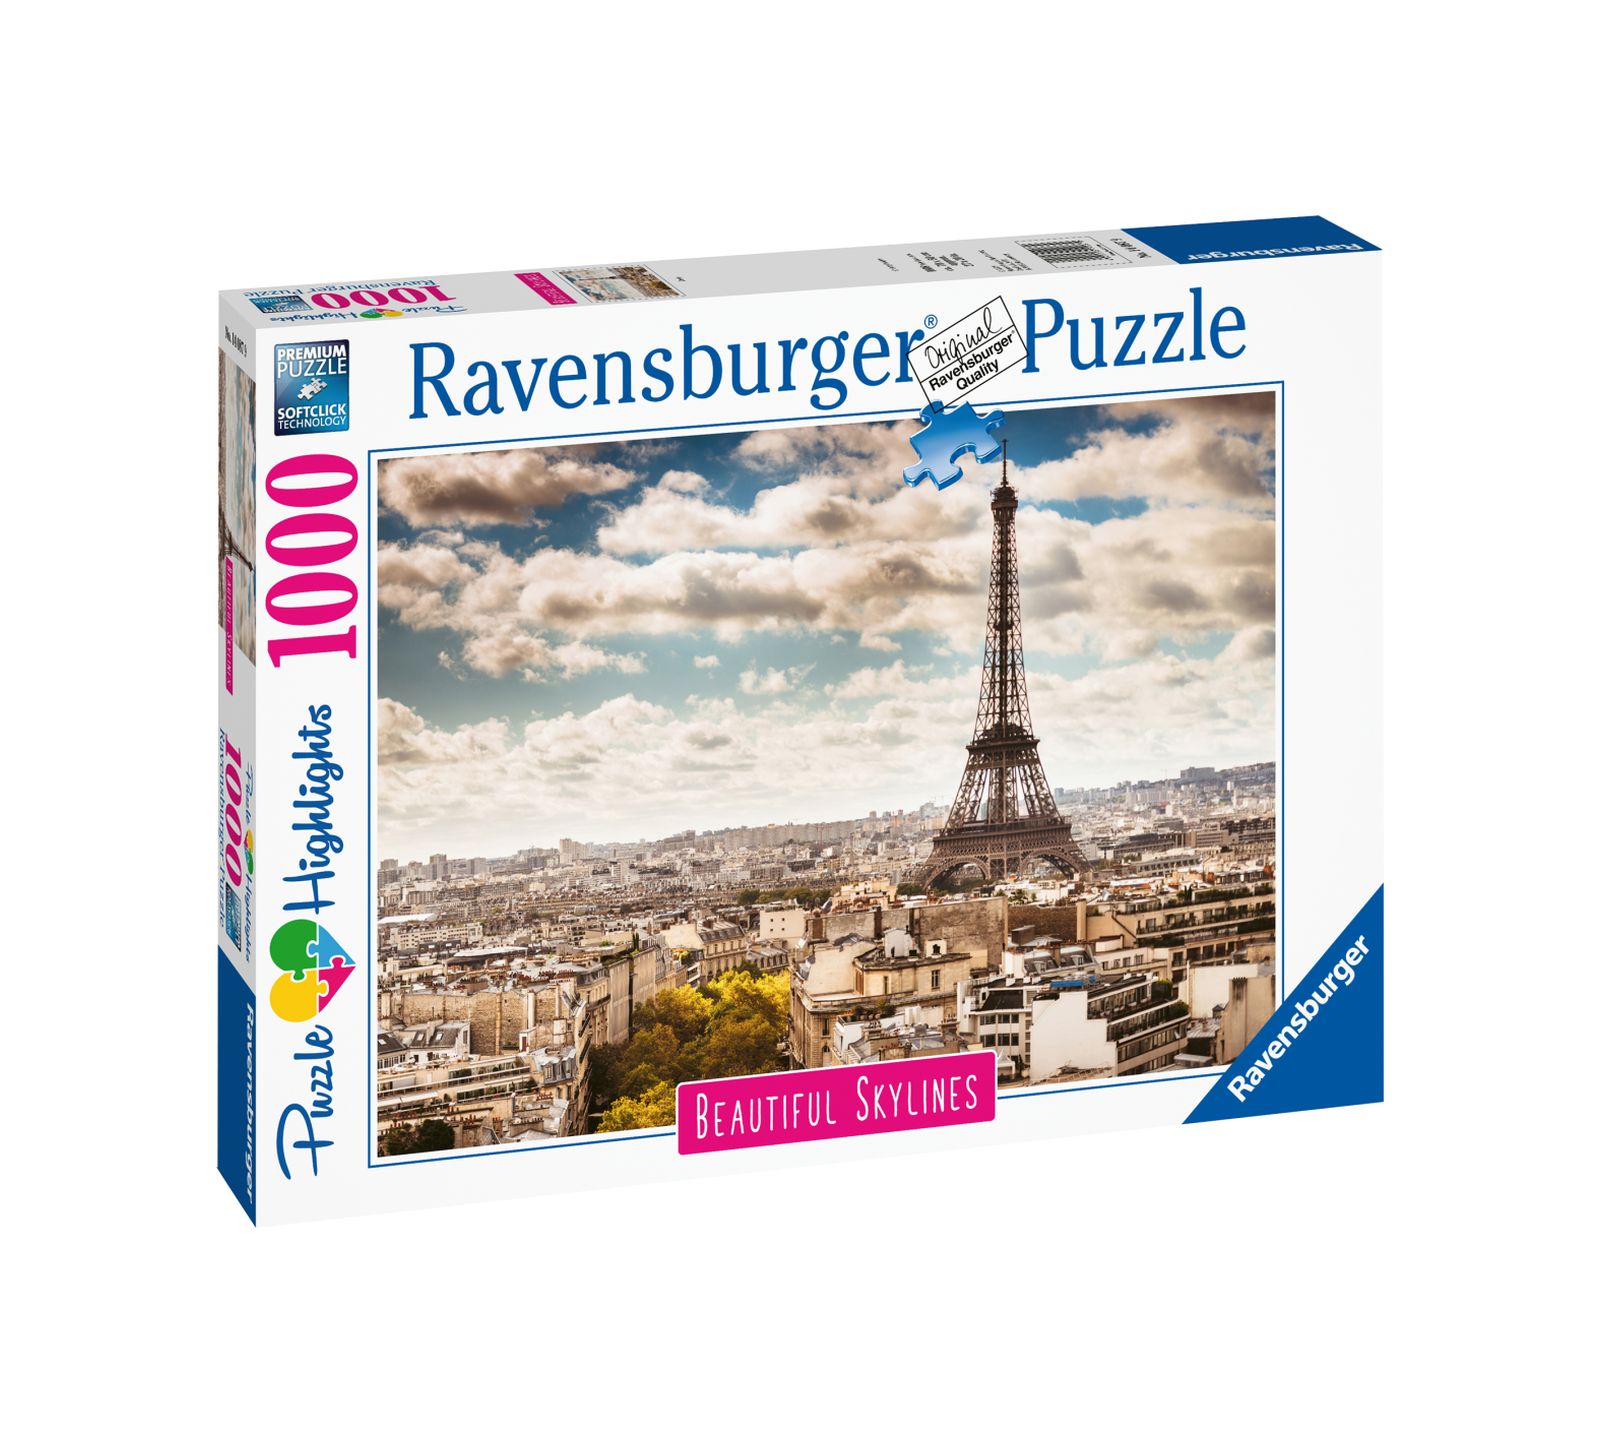 Ravensburger puzzle 1000 pezzi paris - RAVENSBURGER